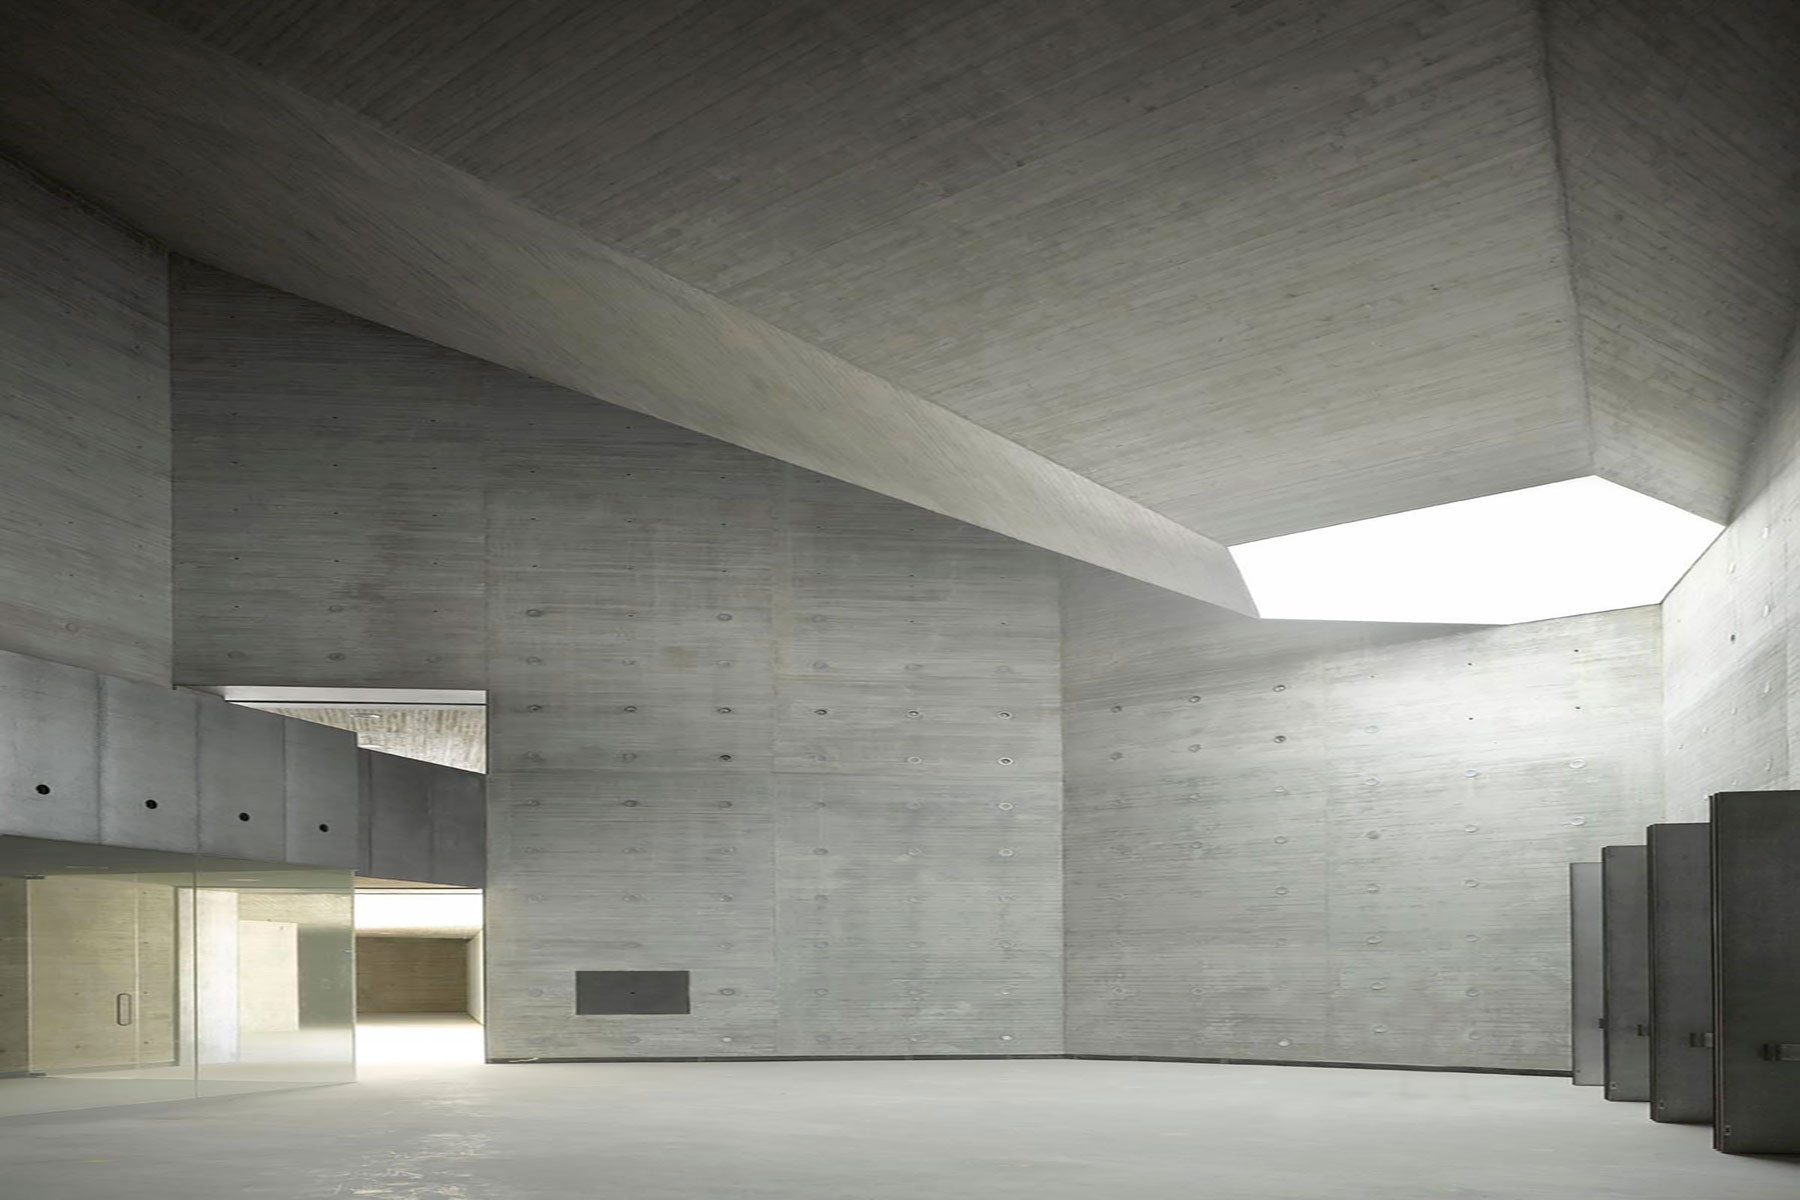 11320 minimalist architectural design سبک مینیمال در دکوراسیون داخلی